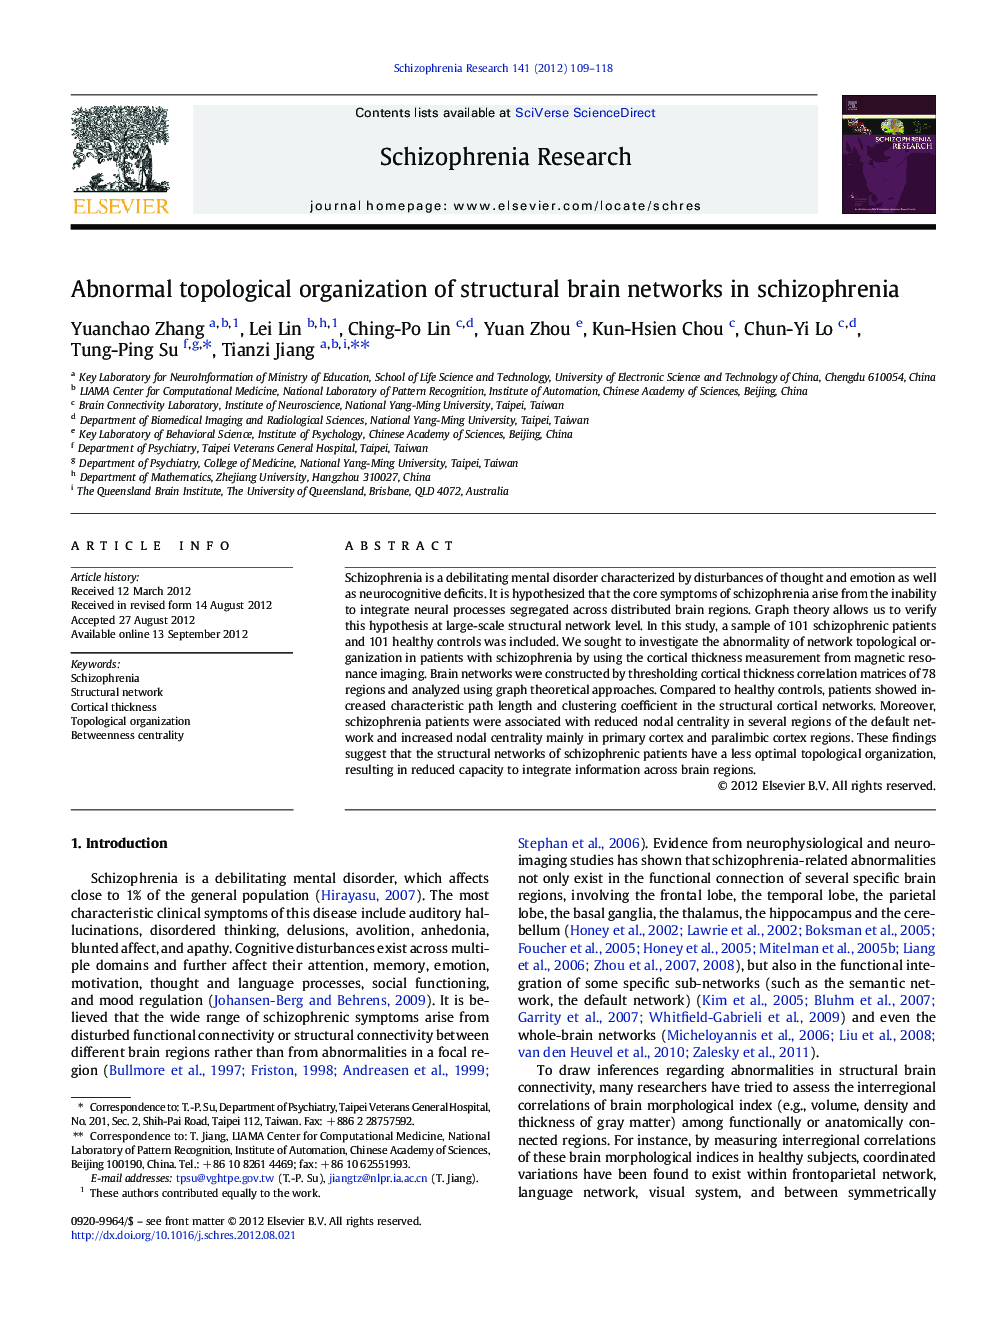 Abnormal topological organization of structural brain networks in schizophrenia